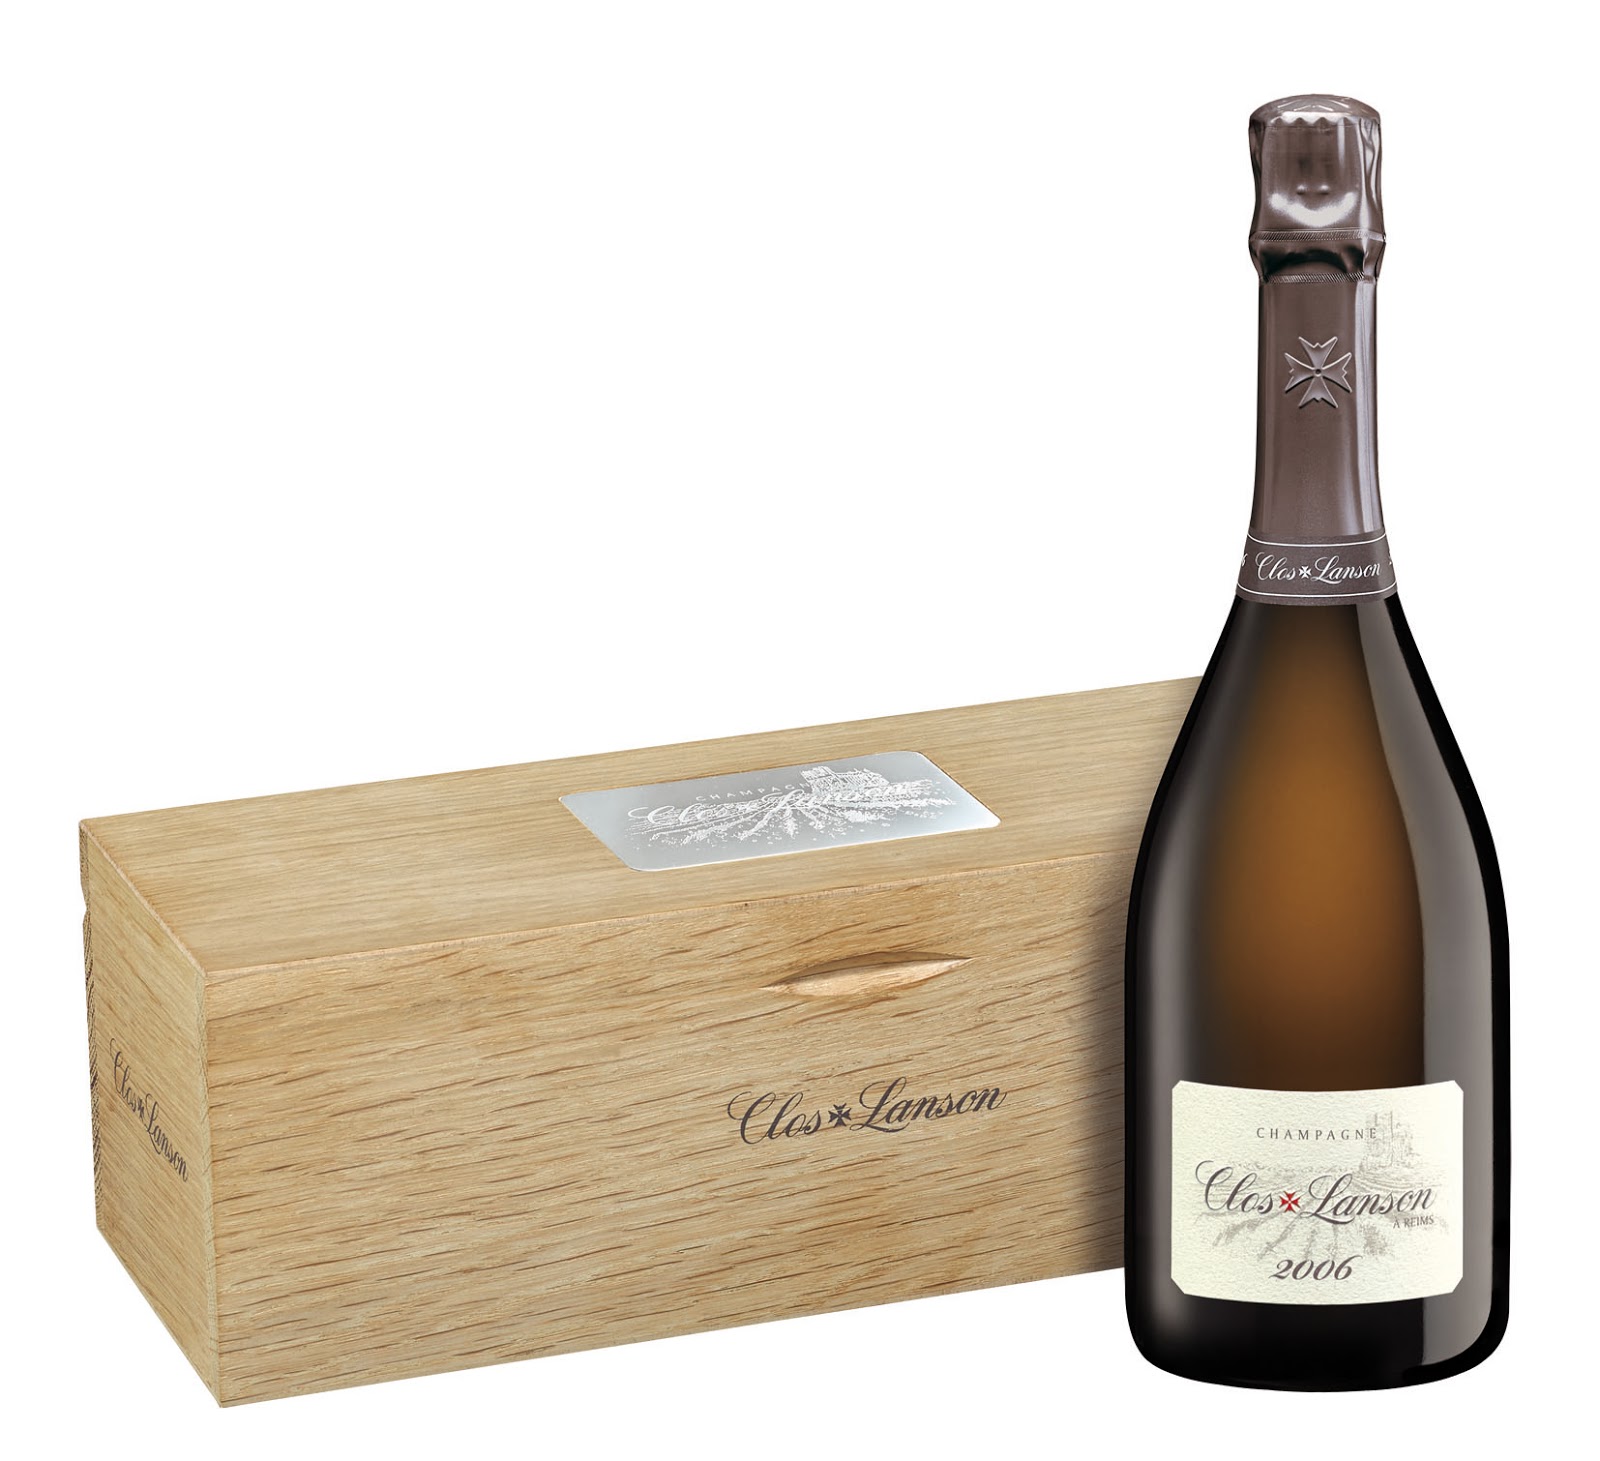 Maison champagne. Шампанское Lanson le Blanc de blancs. Шампанское Lanson Black Label Brut, Gift Box 0,75 л. Лансон Ле Винтаж брют 2009. Шампанское Мейсон дю ревенир.